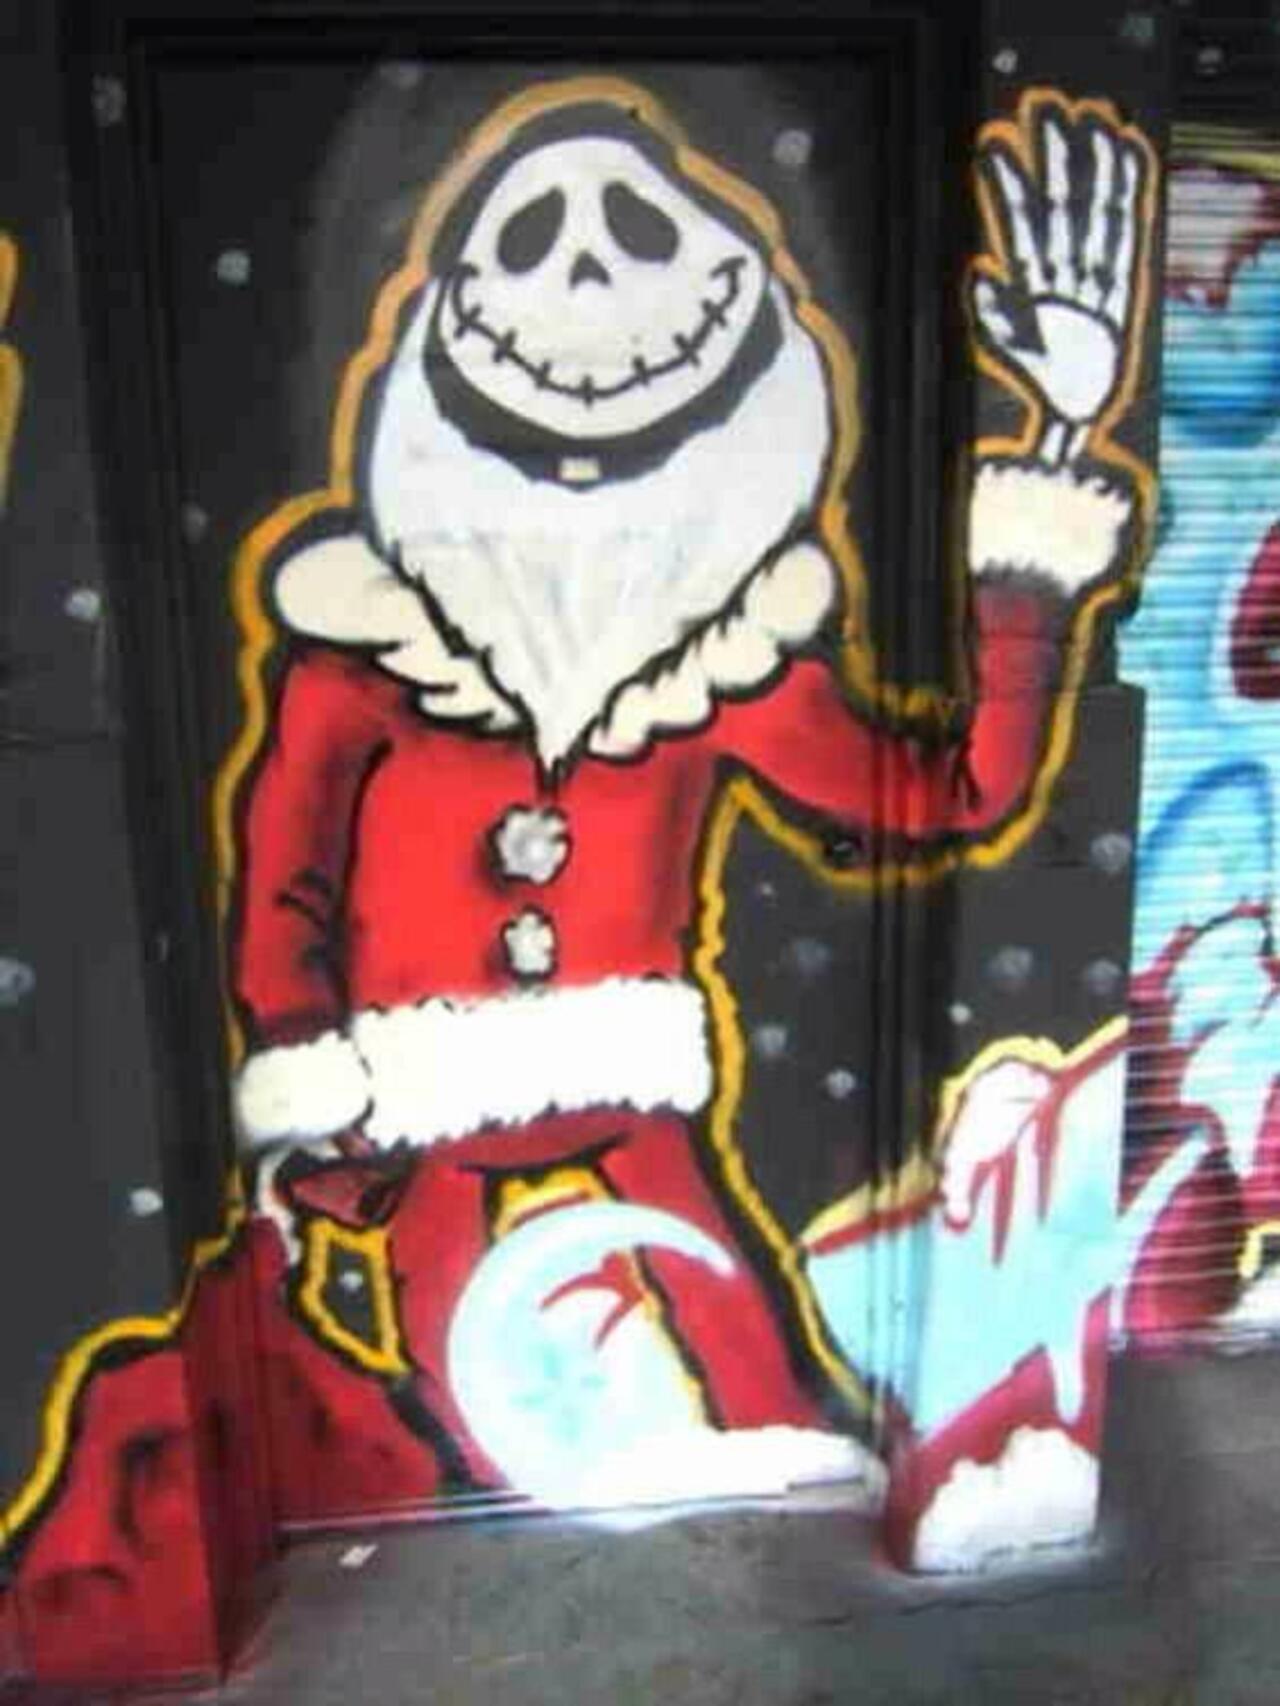 "Nightmare Before #Christmas" #streetart at Madison Event Center #urbanart #graffiti https://t.co/UNFgAUD40q